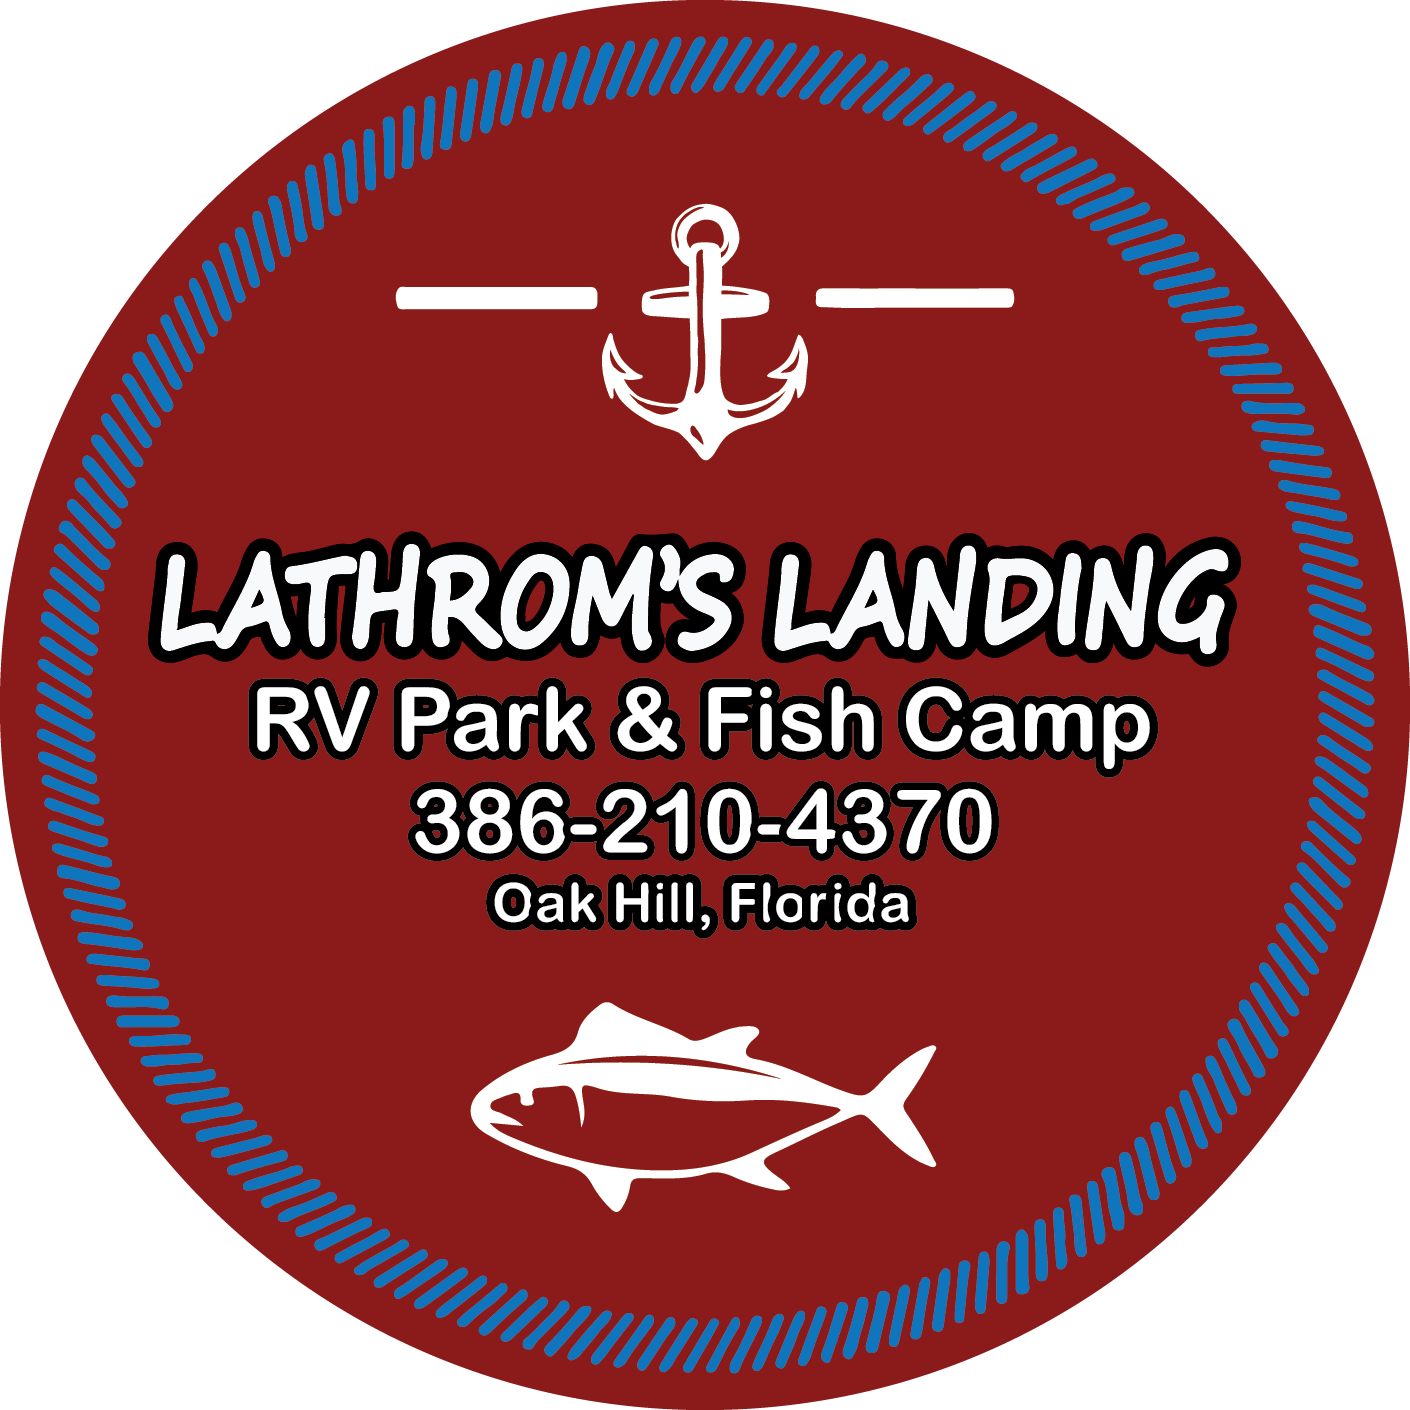 Lathrom's Landing RV Park & Fish Camp